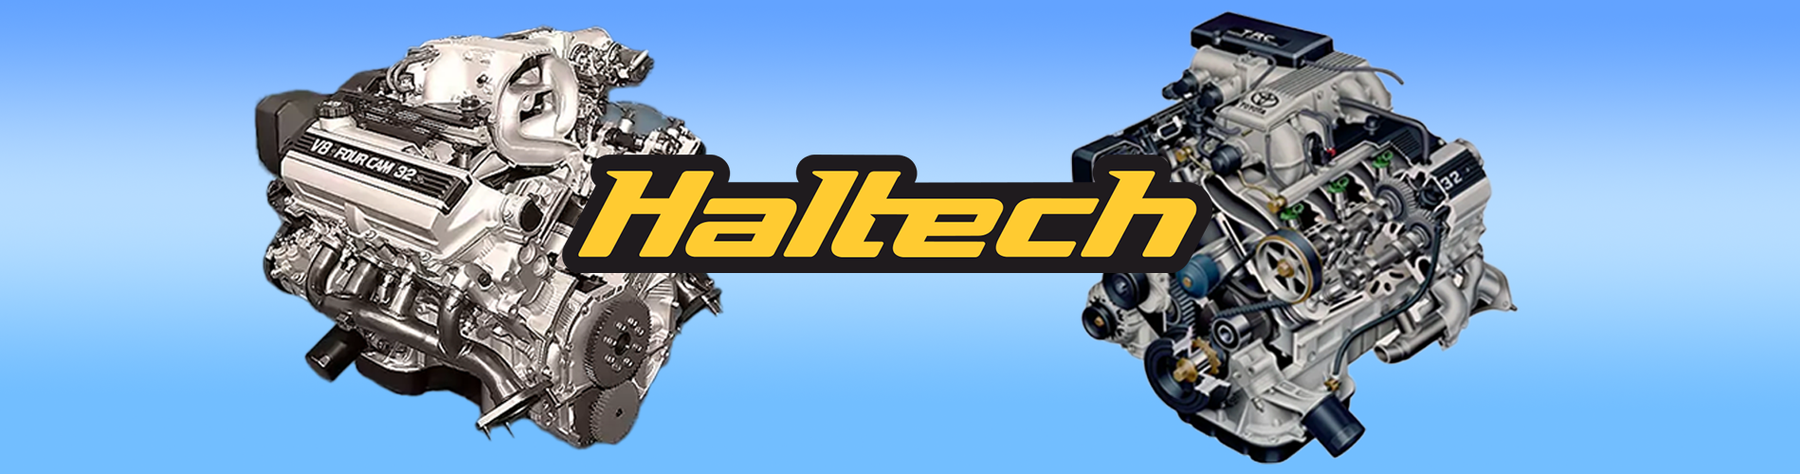 Haltech-1UZ-Technical-Information Goleby's Parts